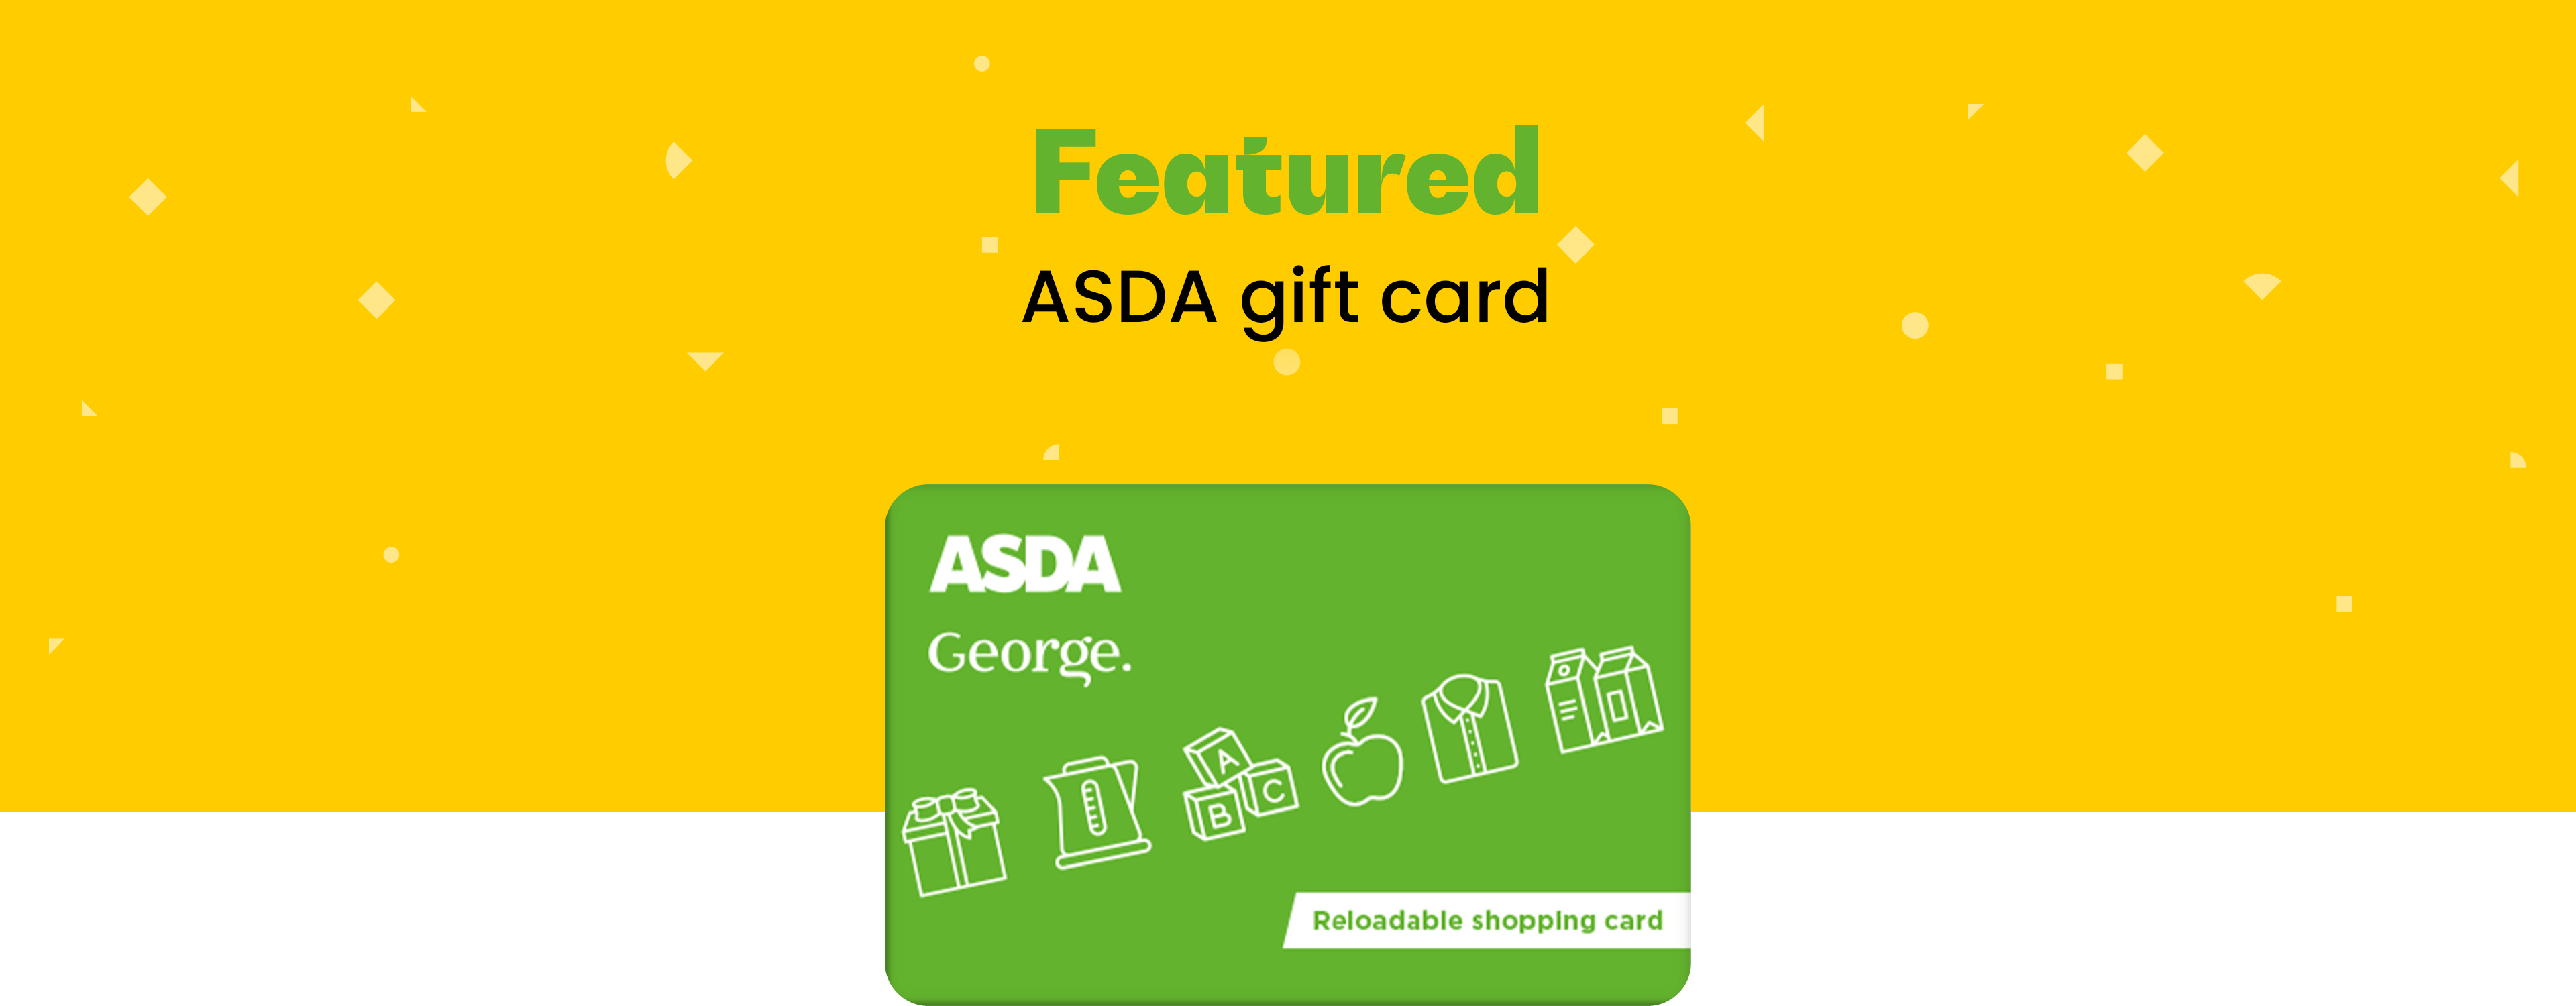 The ASDA Gift Card